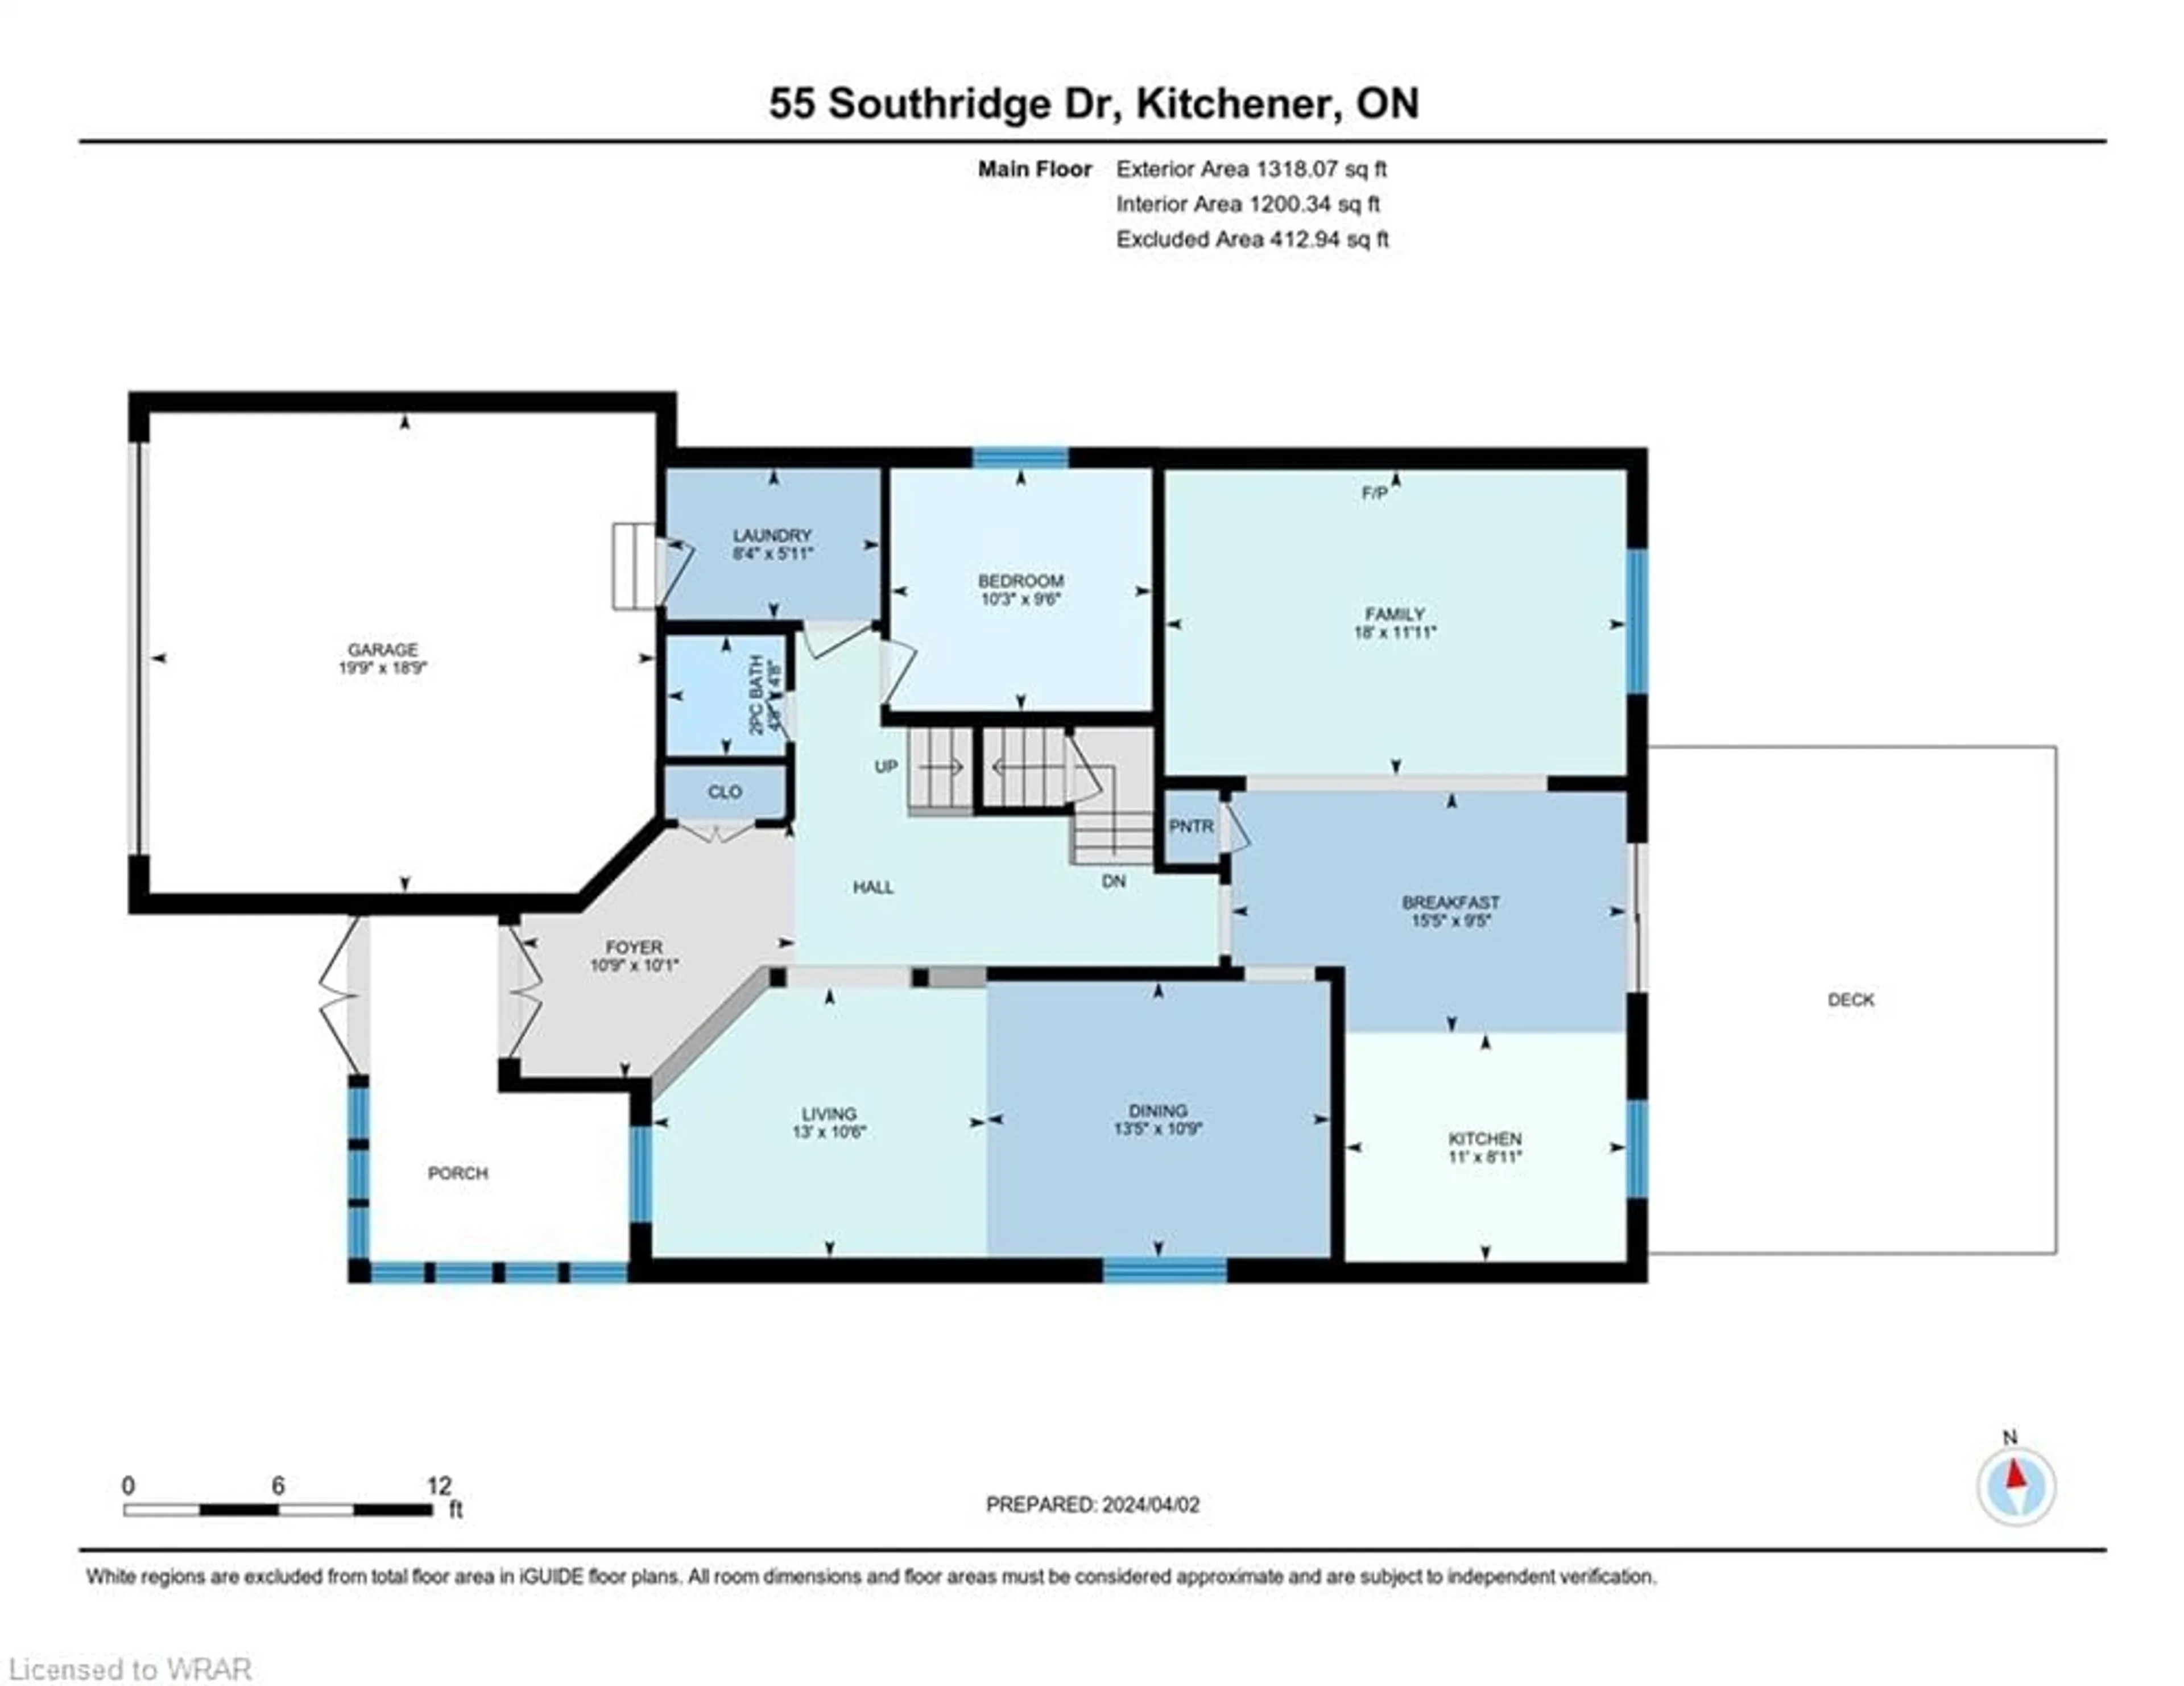 Floor plan for 55 Southridge Dr, Kitchener Ontario N2P 2Y1